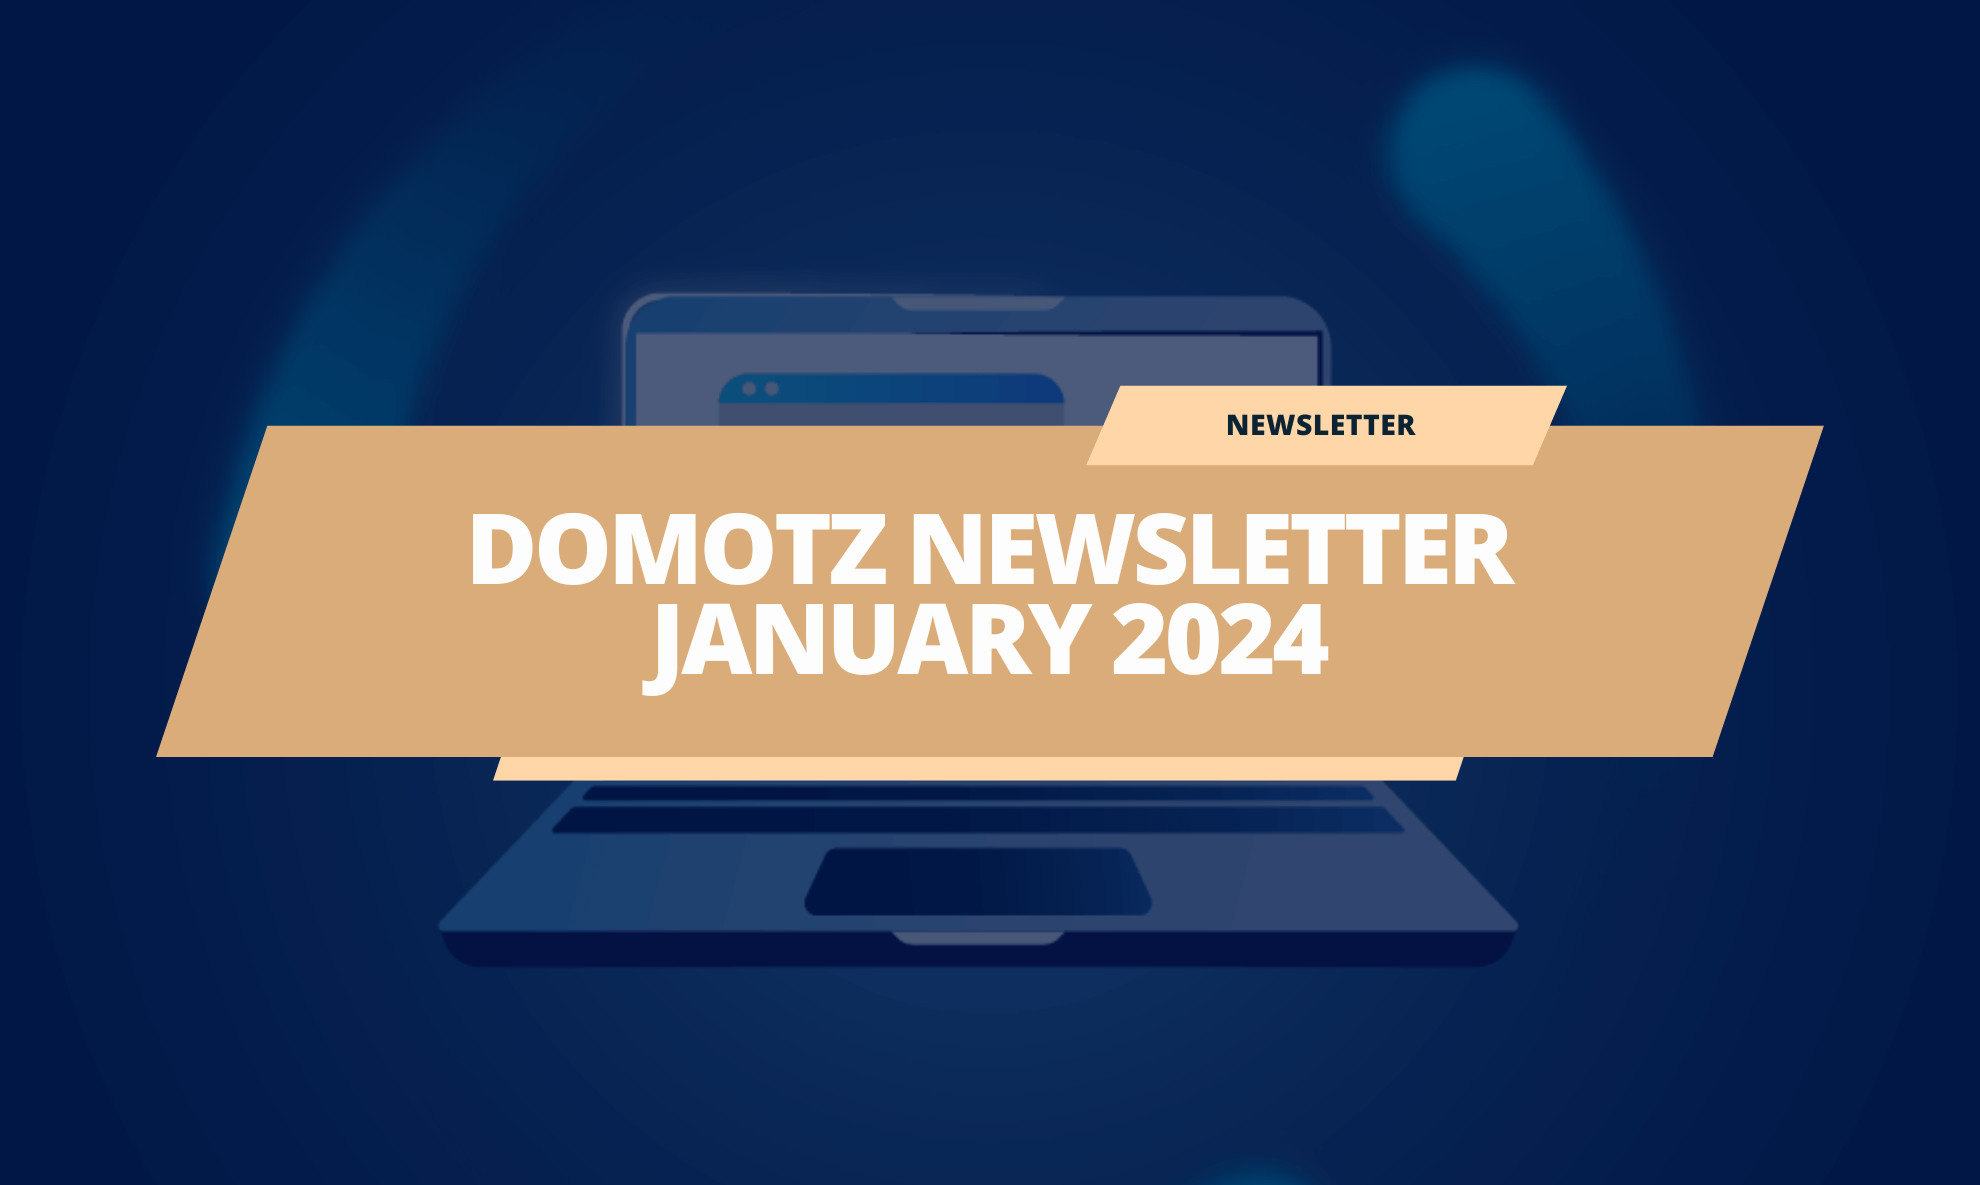 Domotz Newsletter – January 2024 insights